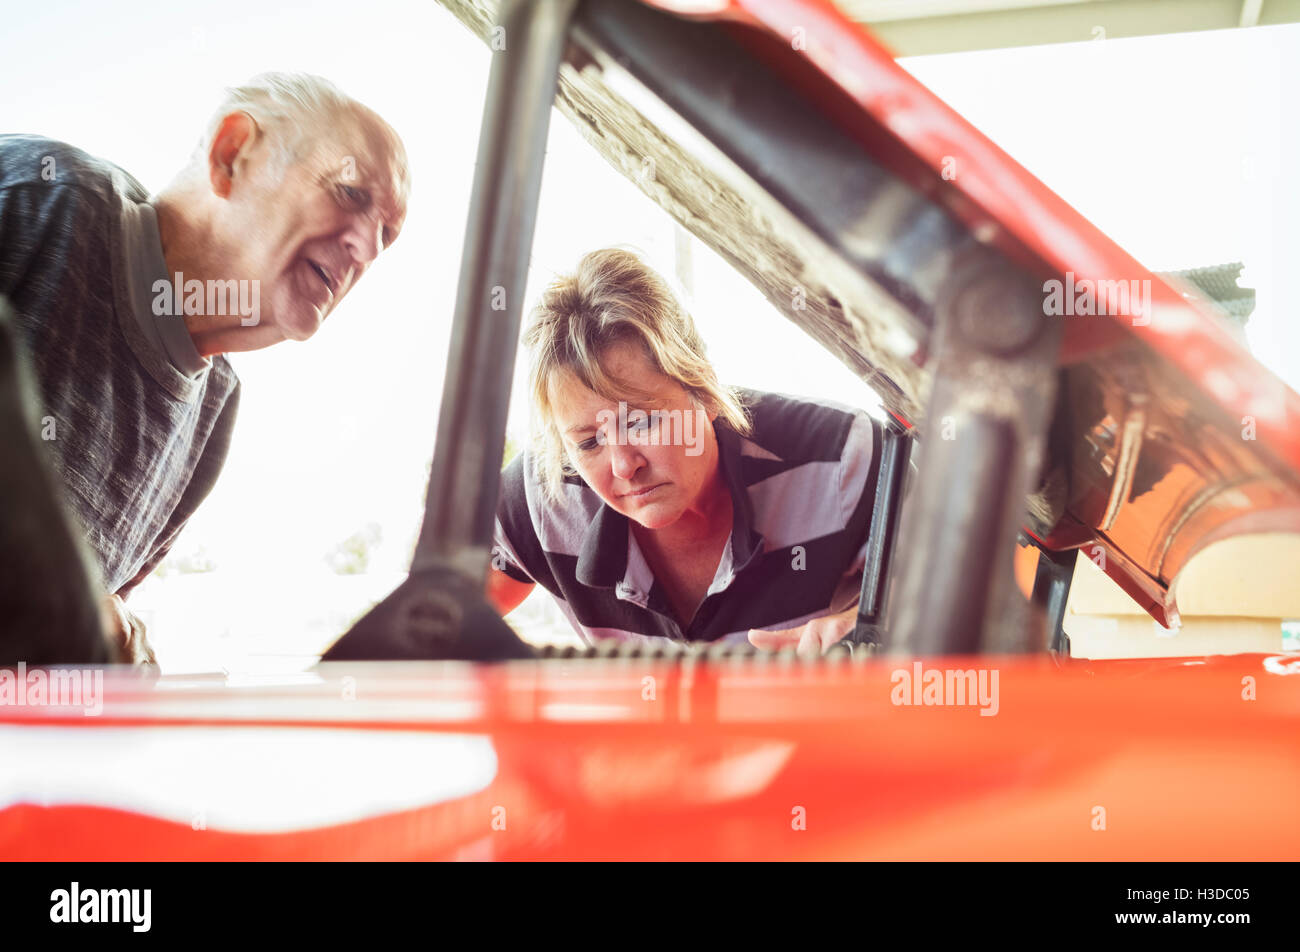 Mature woman and senior man repairing a car, looking under bonnet. Stock Photo